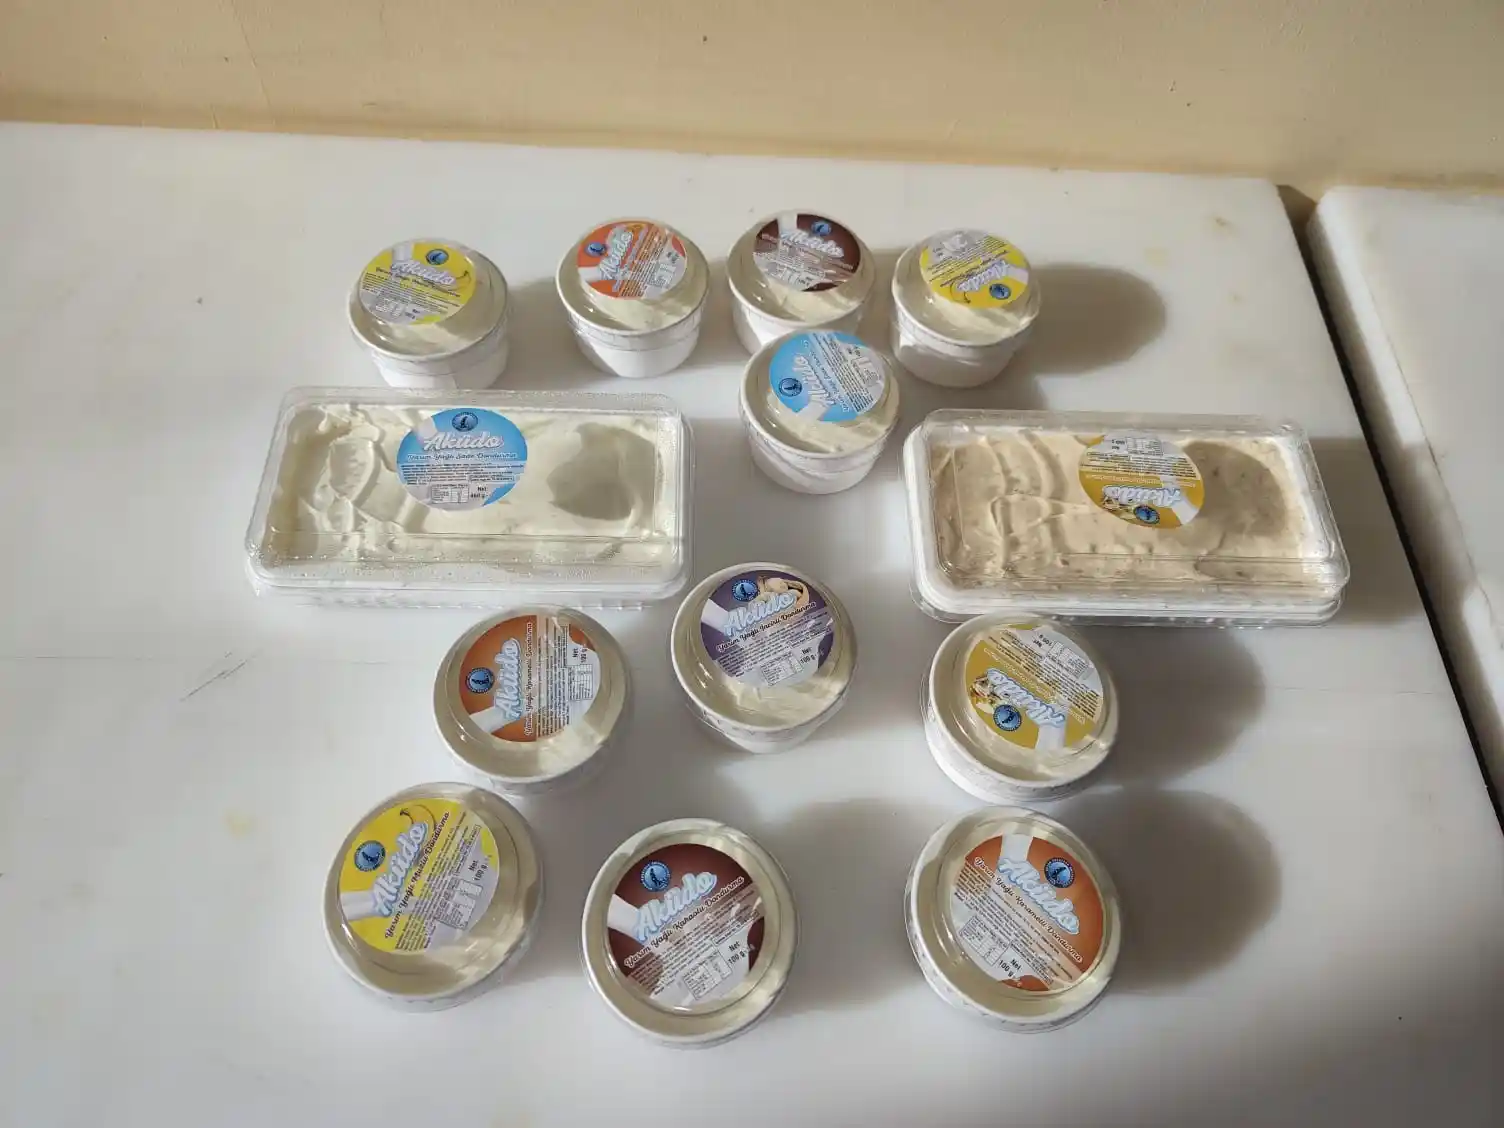 Afyonkarahisar’da manda sütlü dondurması tescillendi
